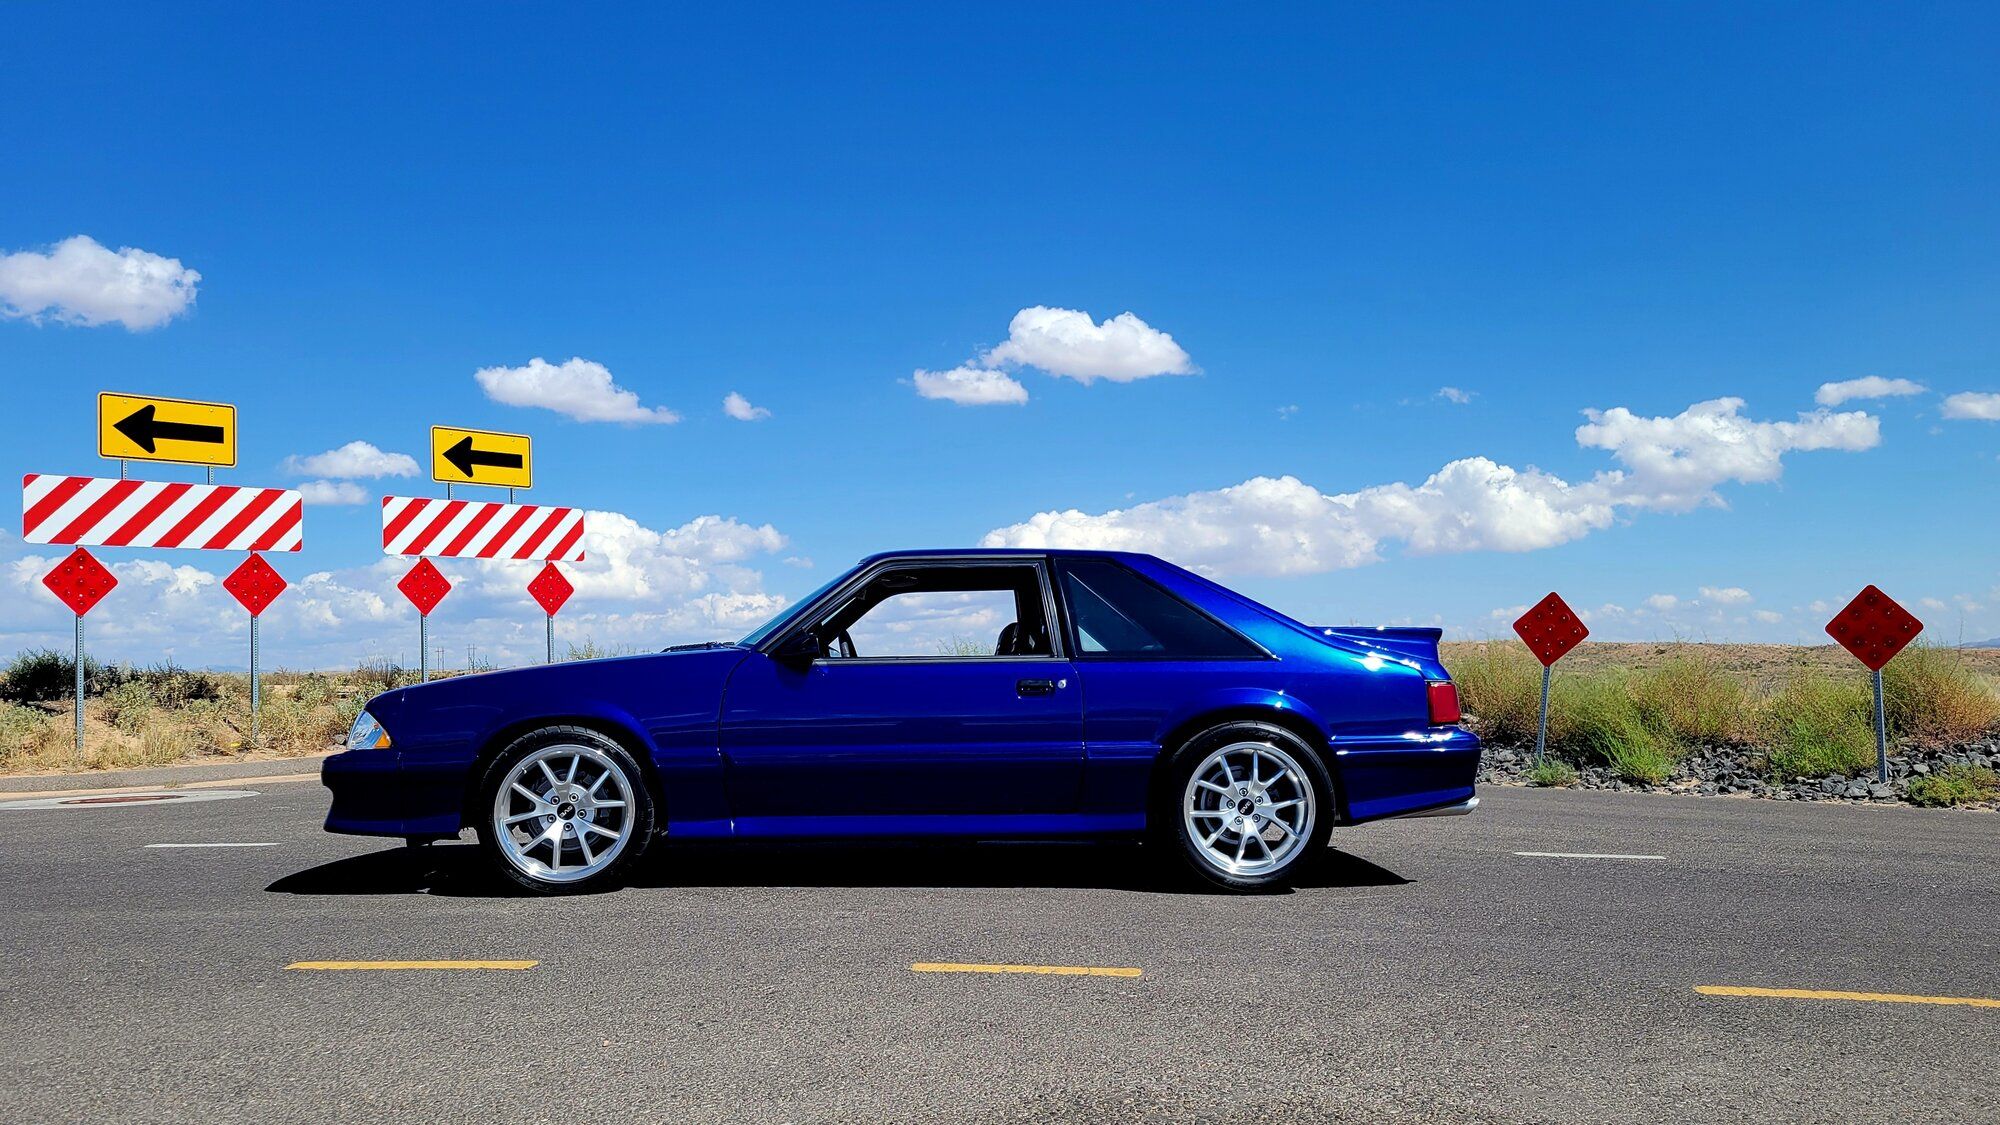 1988 Mustang
('88 Foxbody)